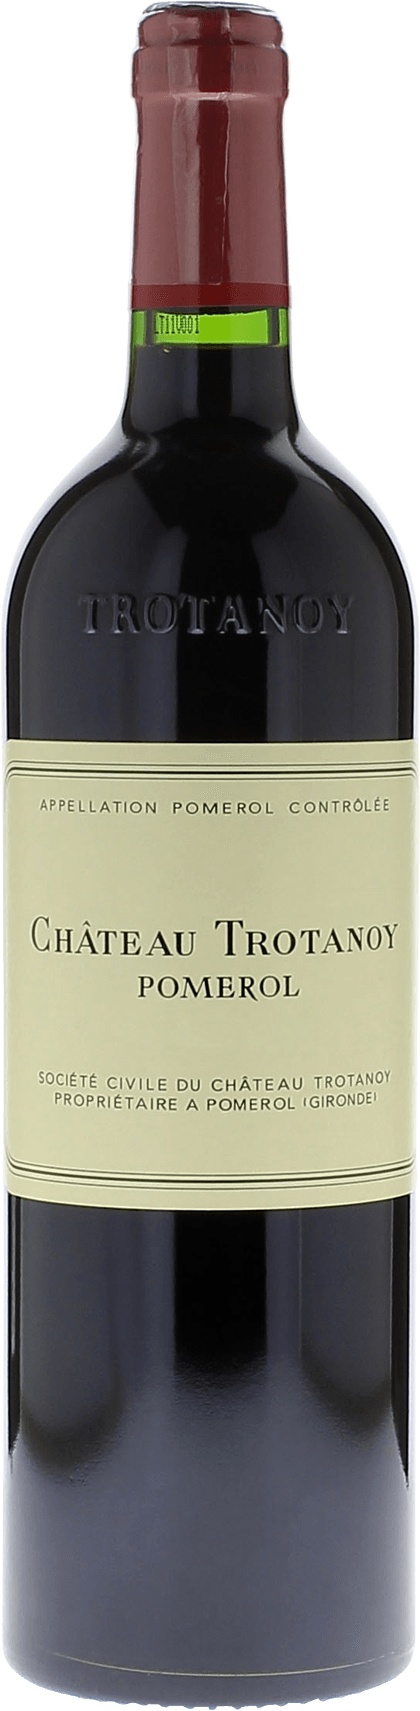 Trotanoy 1999  Pomerol, Bordeaux rouge